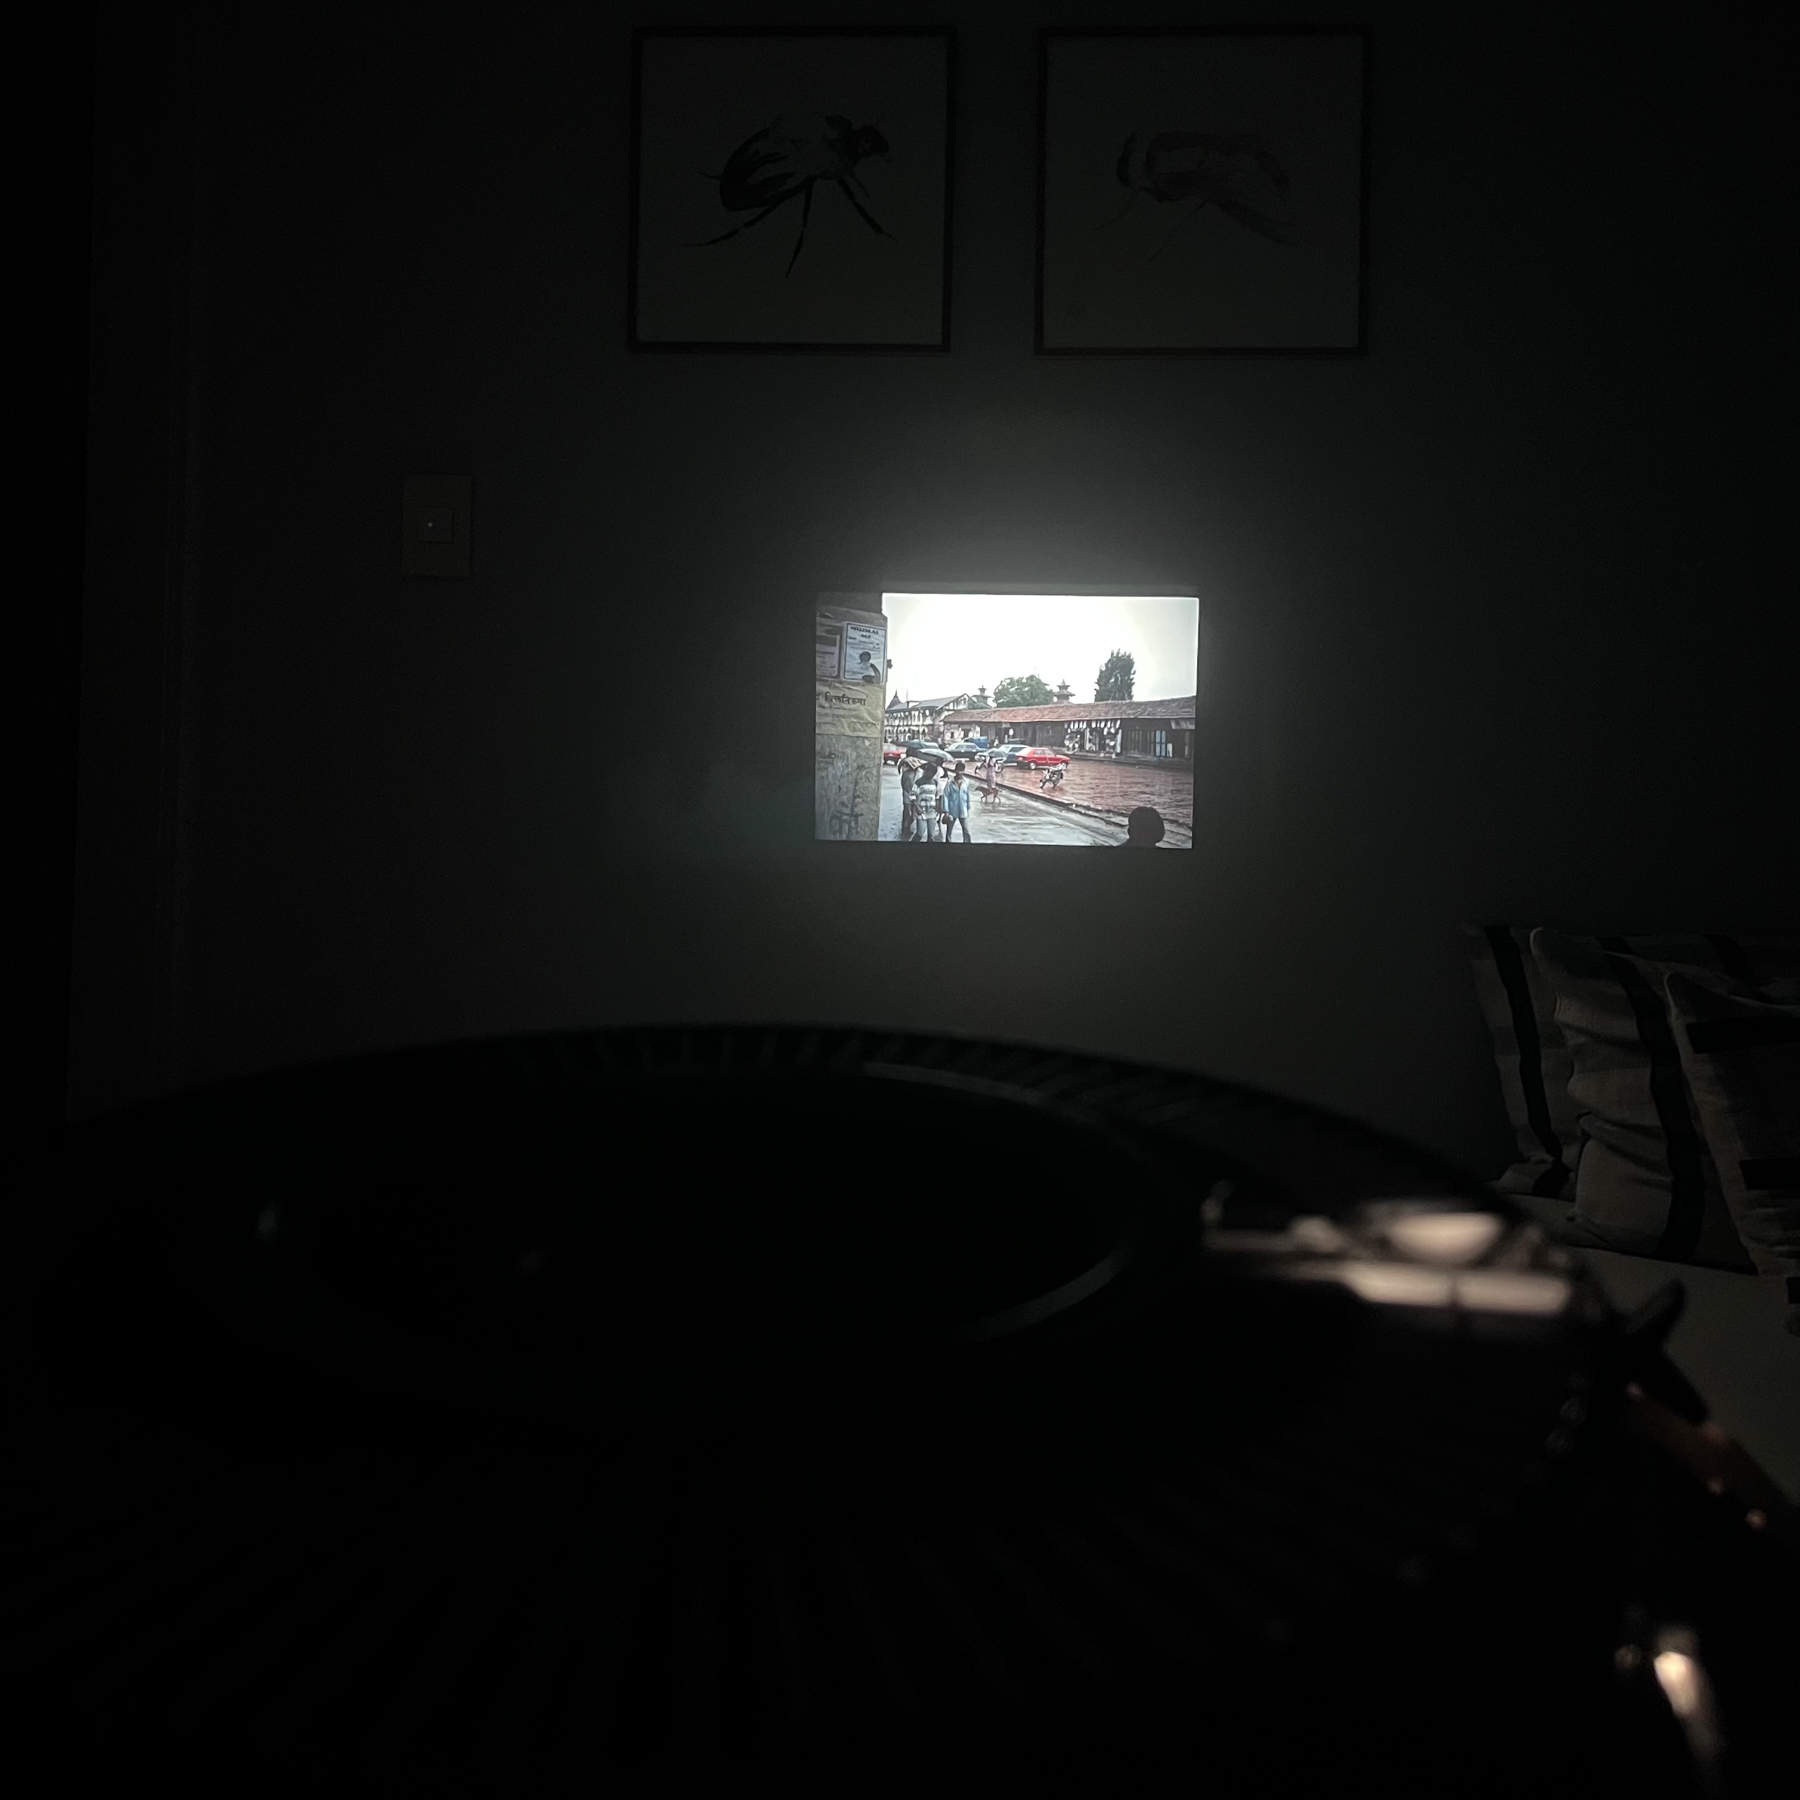 Slide projector